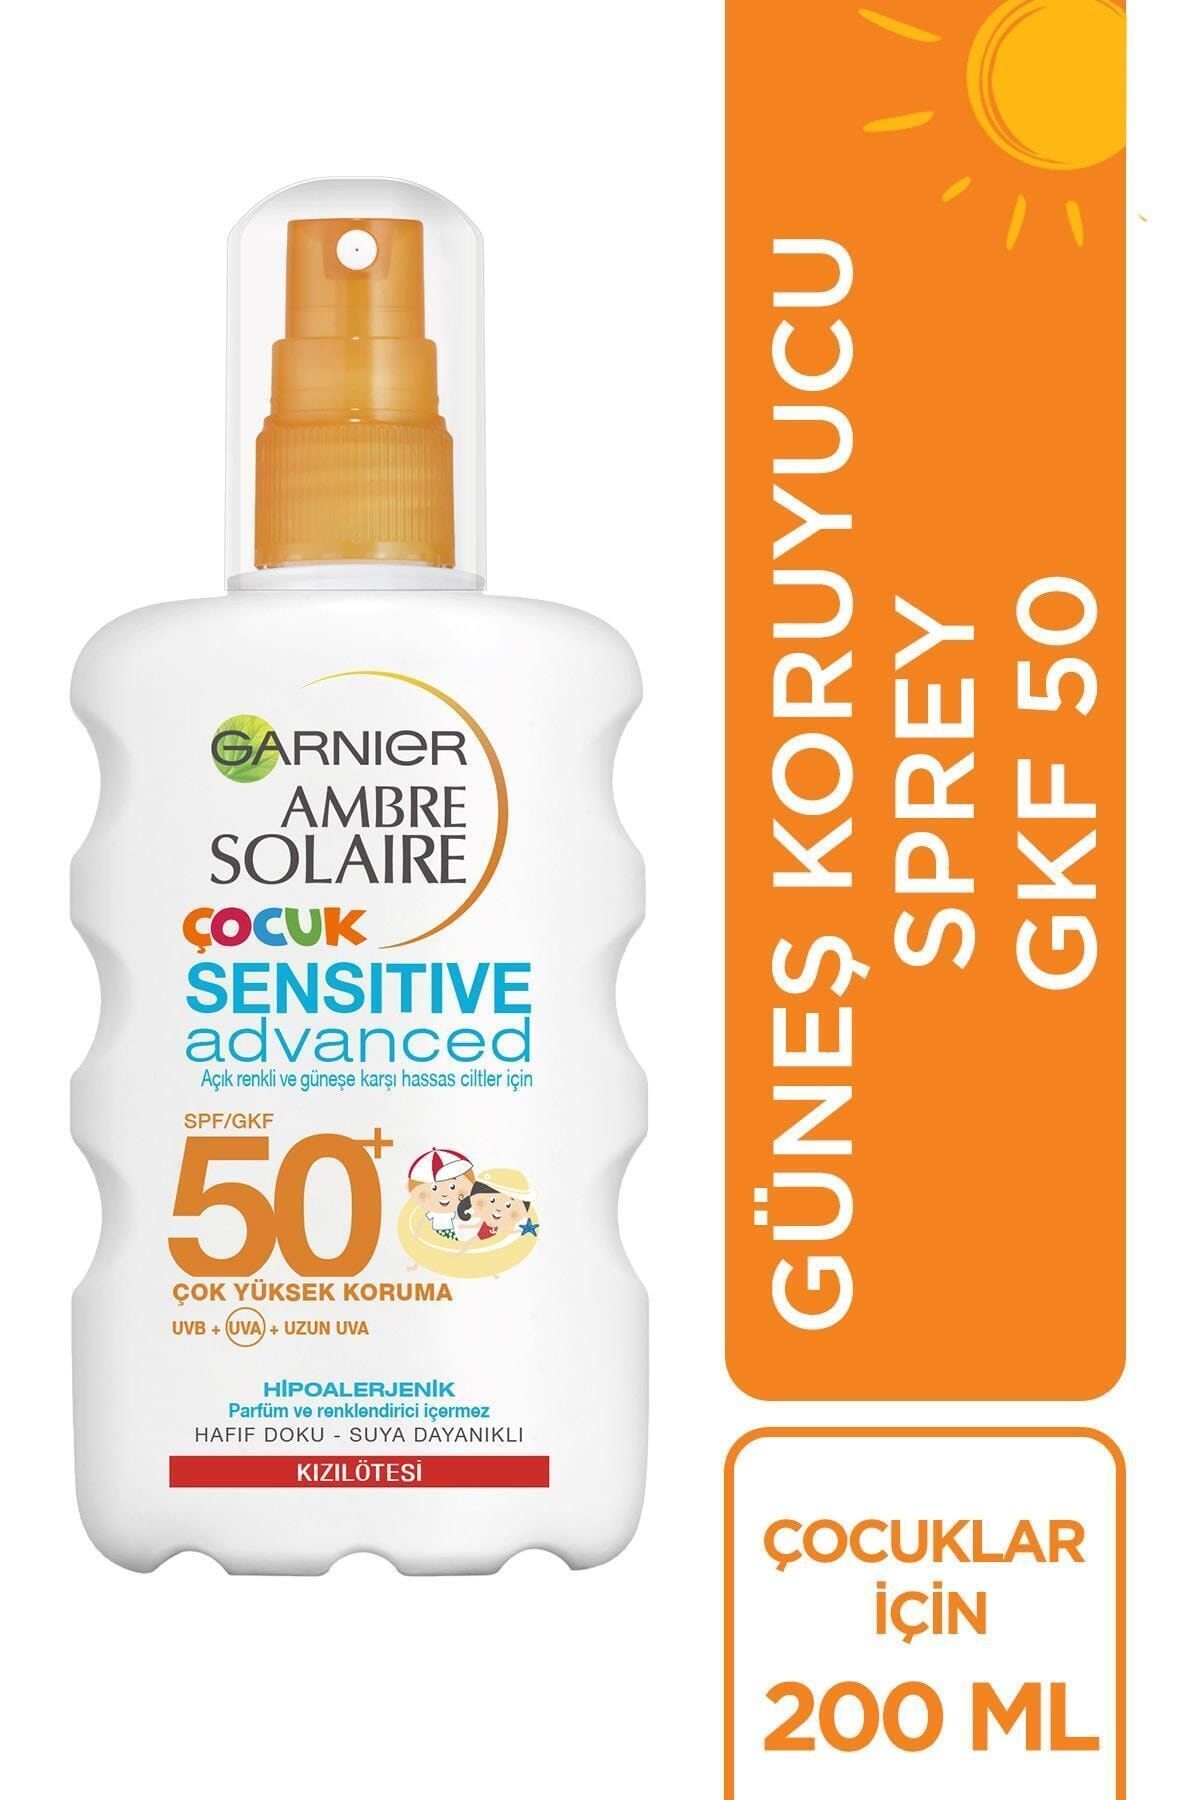 Garnier محافظت کننده آفتابی SPF 50 برای کودکان با حجم 200 میلی لیتر